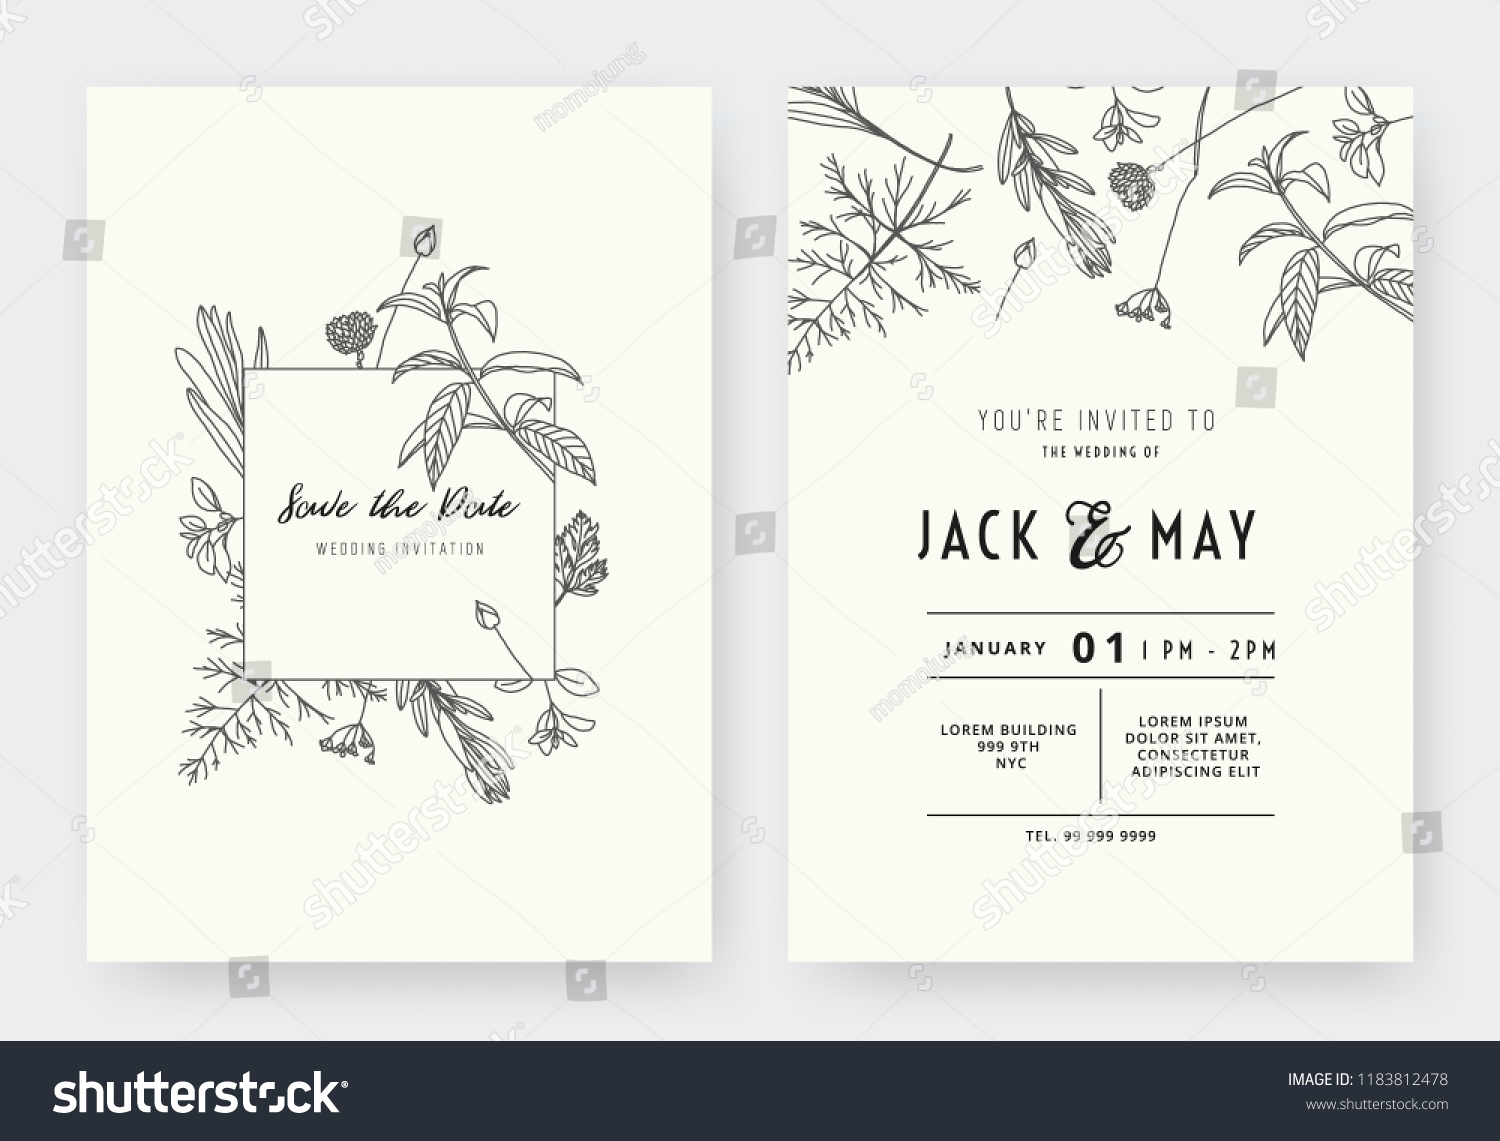 Minimalist wedding invitation card template design, floral black line art ink drawing with square frame on light grey #1183812478